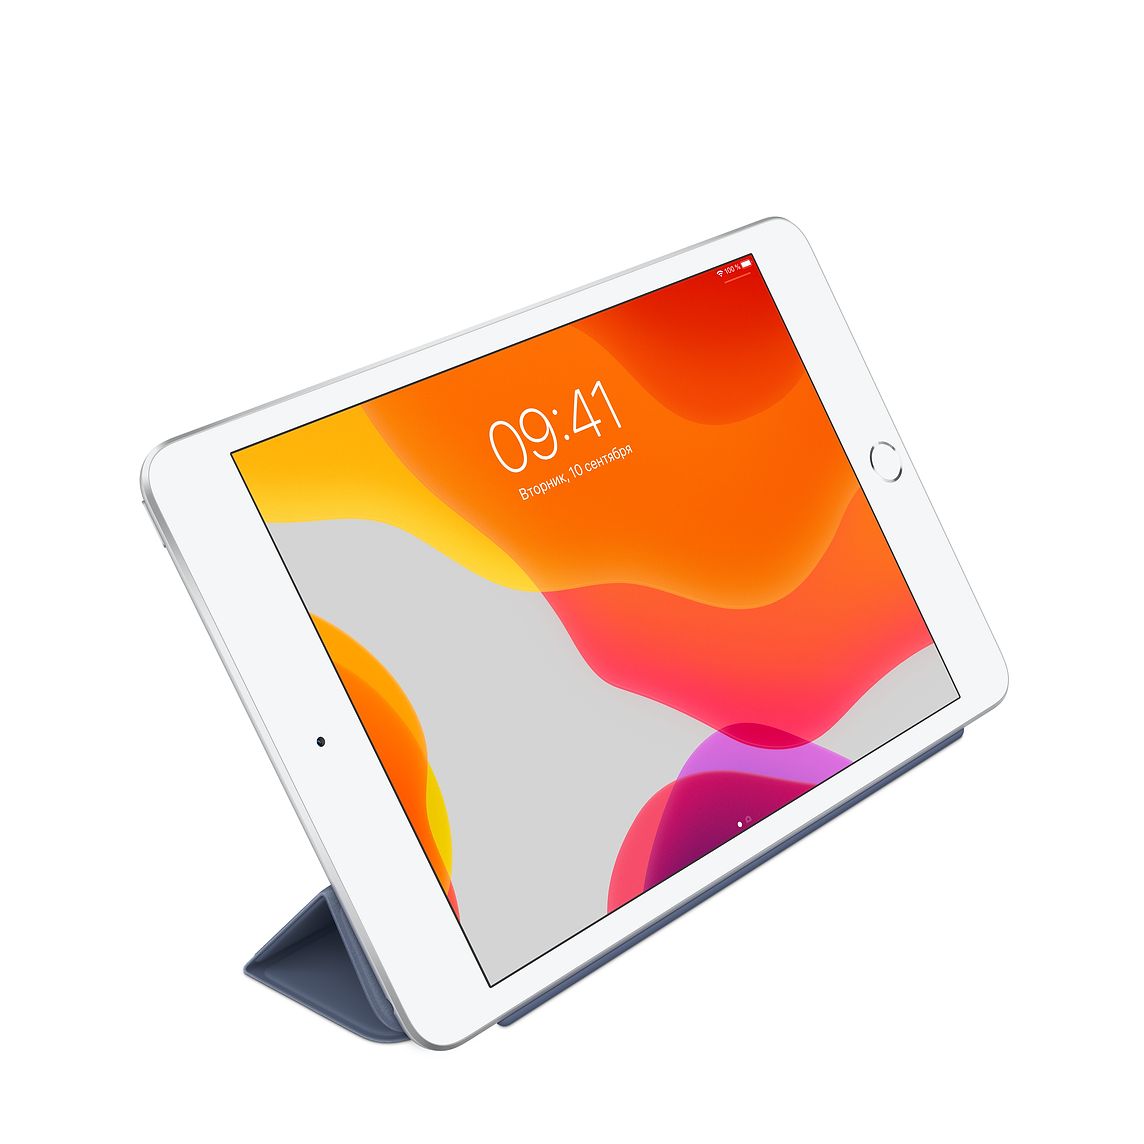 Фото — Чехол Apple Smart Cover для iPad mini, «морской лёд»